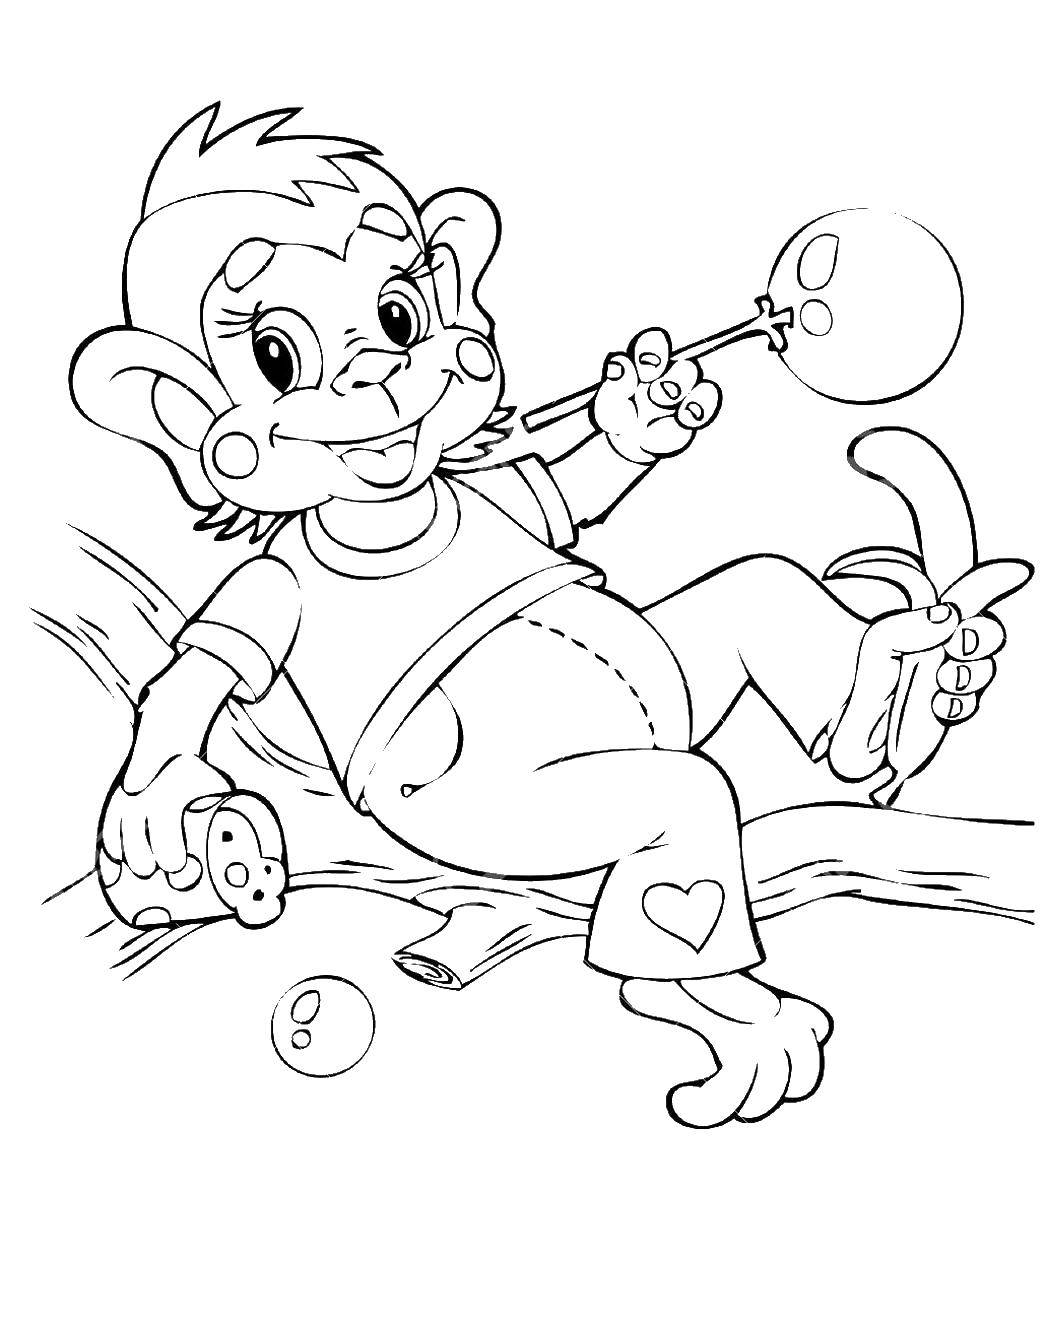 Coloring Monkey blow bubbles. Category APE. Tags:  the monkey, banana.